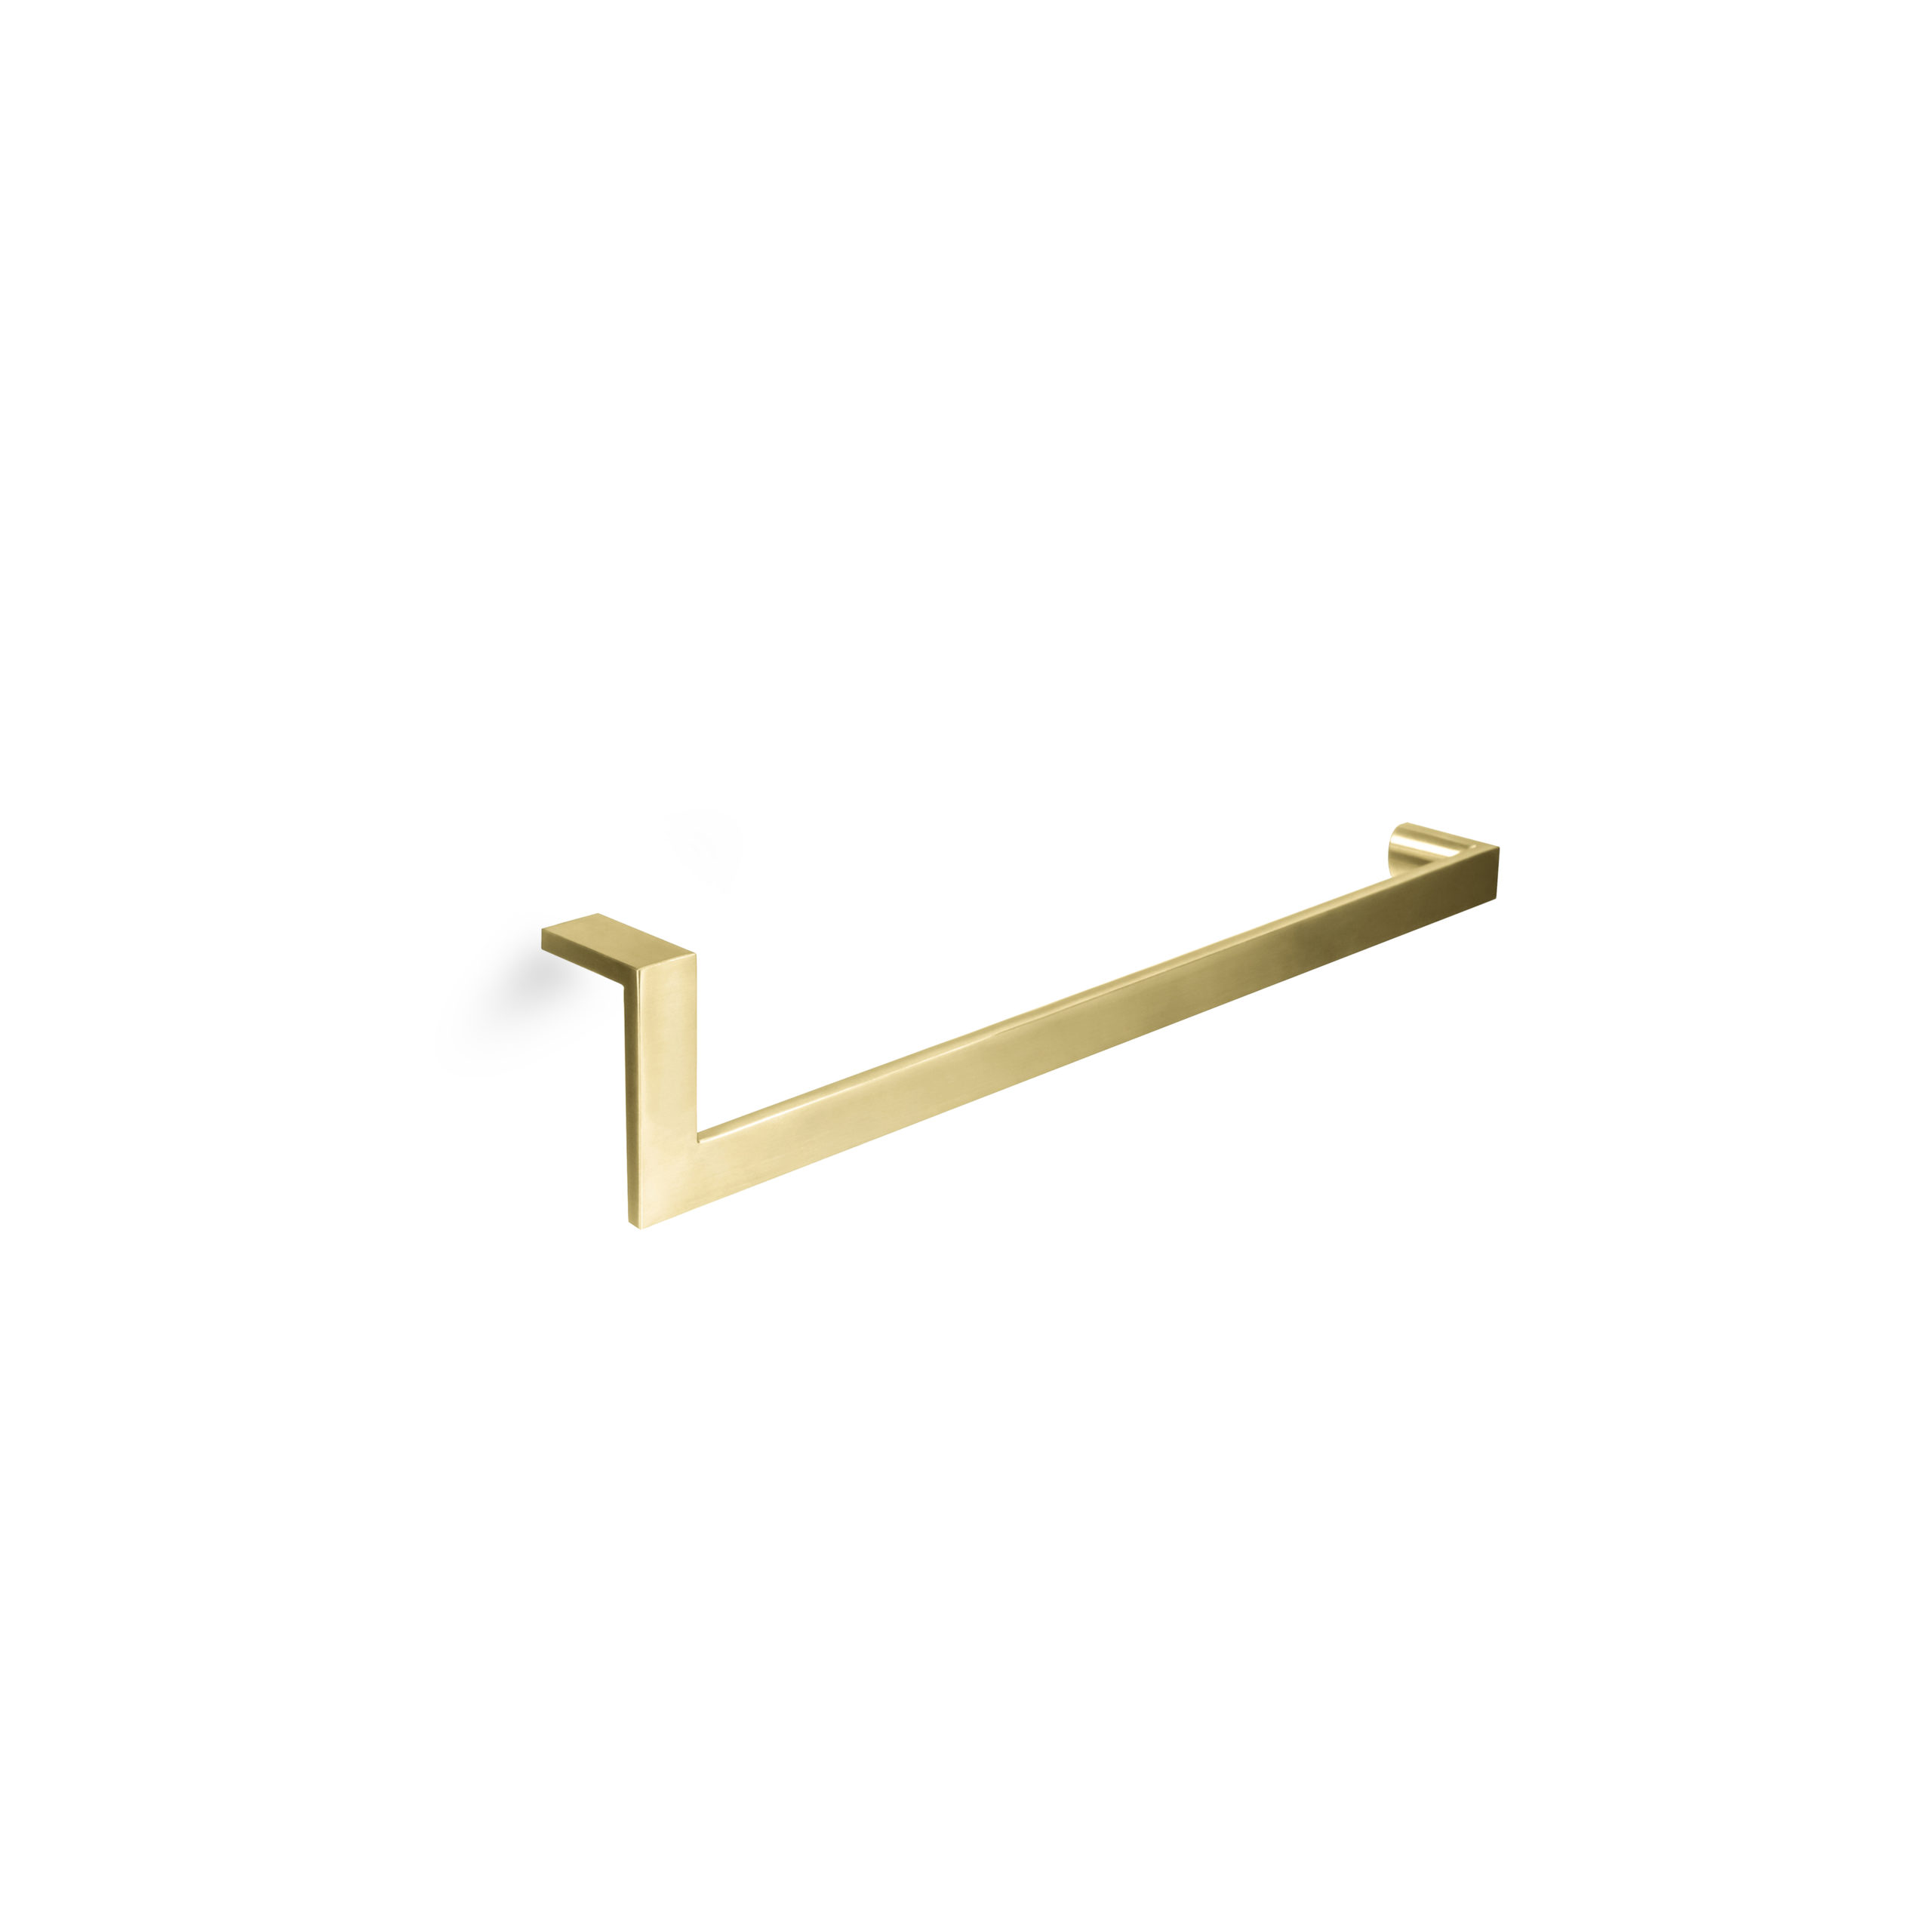 Satin brass modern door handle - surface mount - 18 inch length - product featured image - SKU J 401-1.1 SBZ